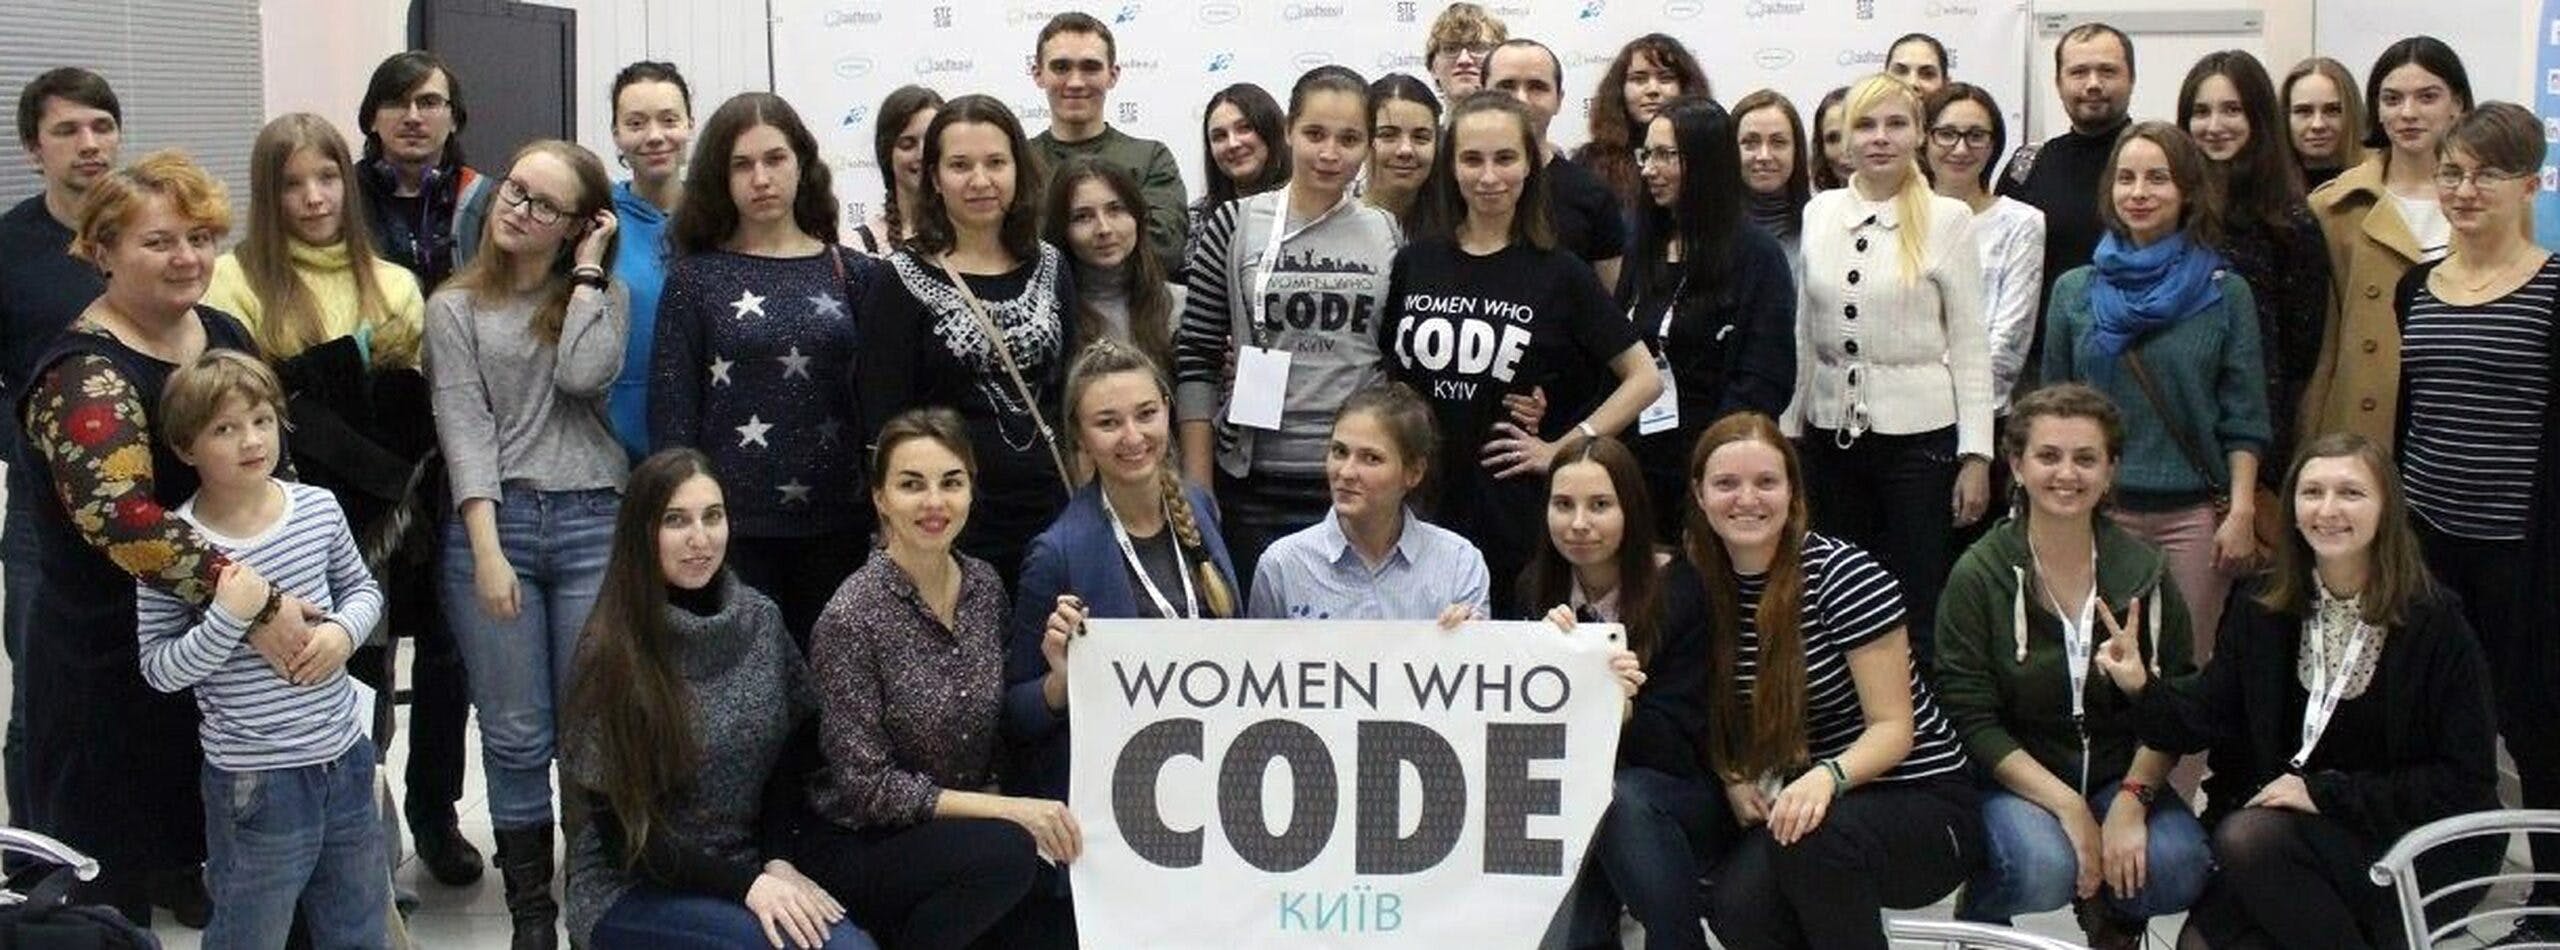 Women Who Code Announces 167,000 Total Members Worldwide